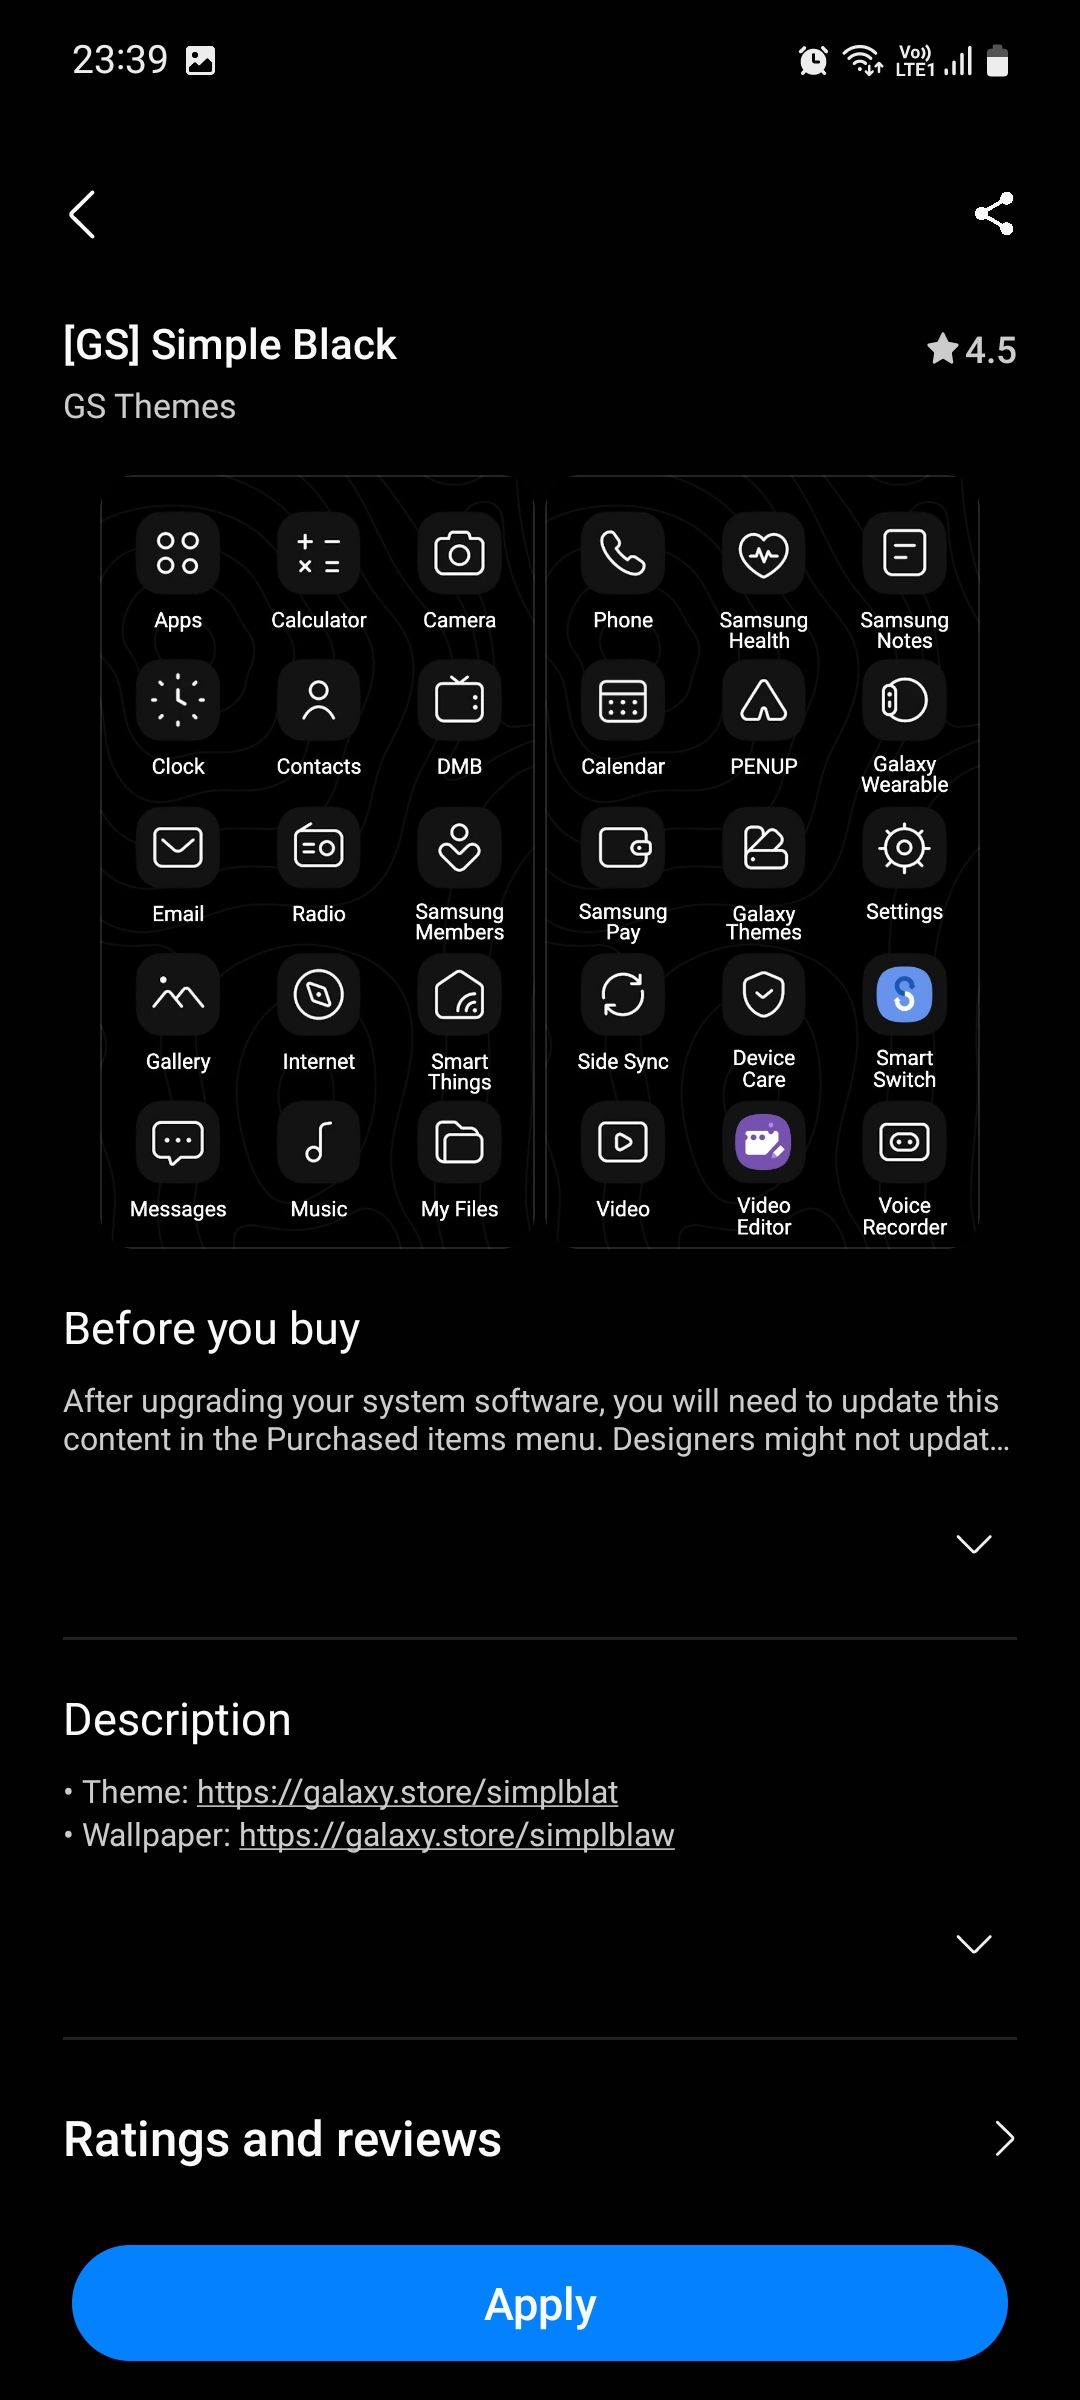 Samsung Galaxy Themes free icon pack